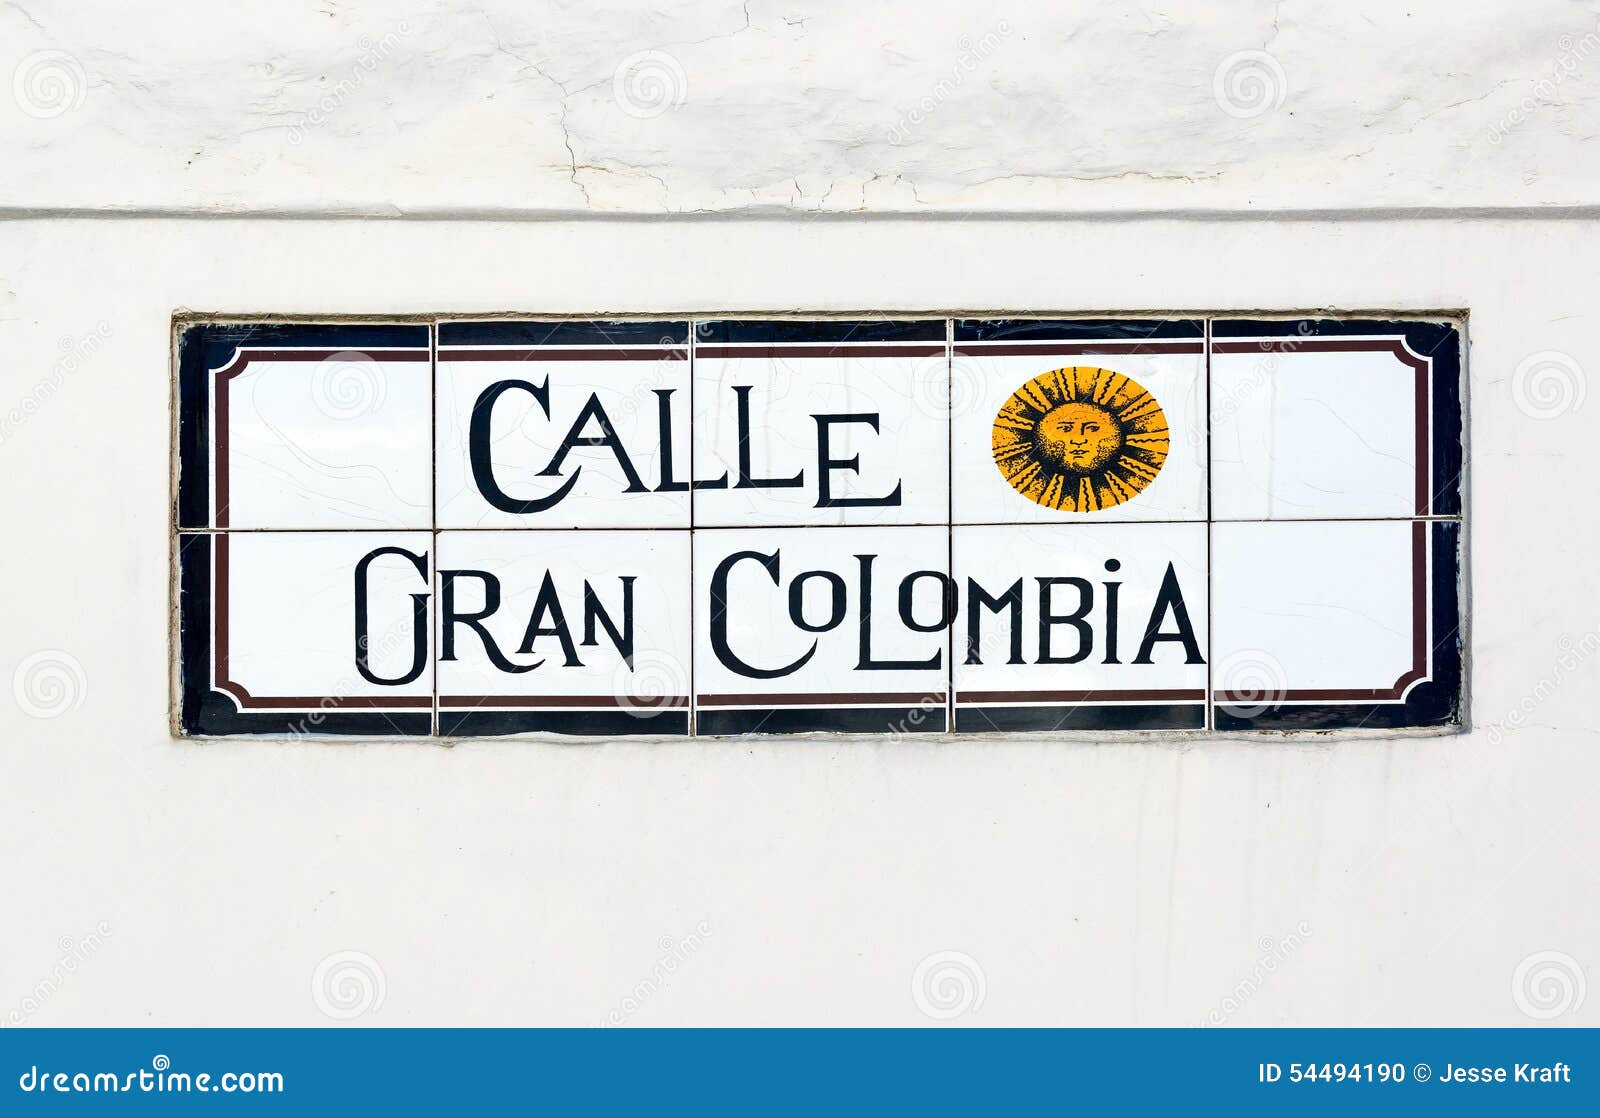 gran colombia street sign in cuenca